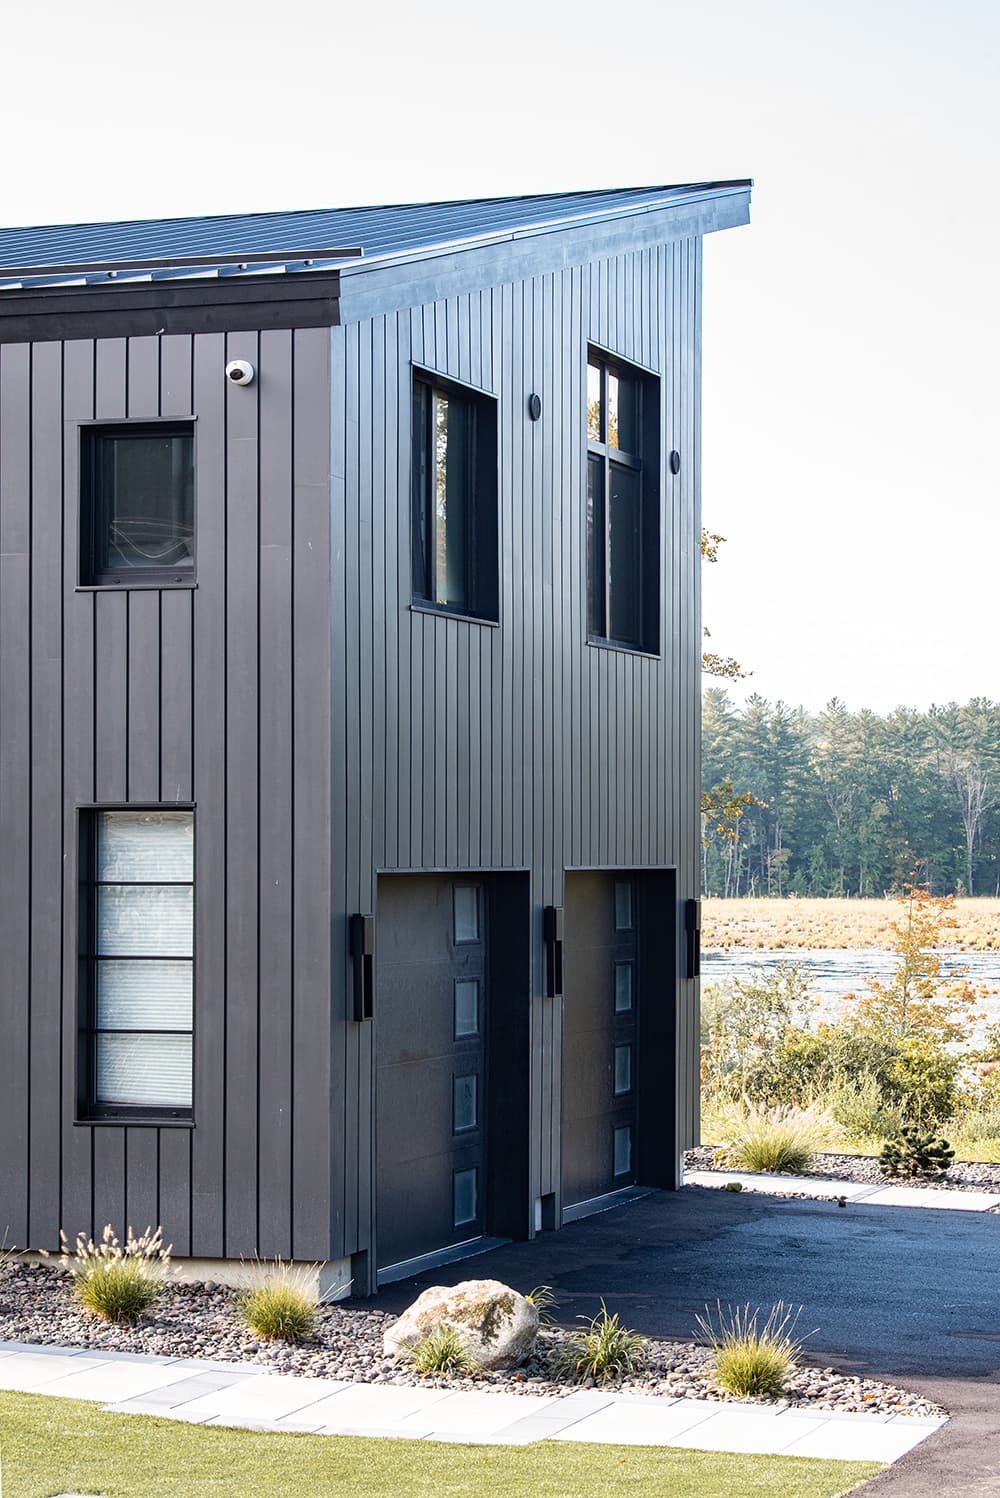 Beaver Lodge Lookout / Kaplan Thompson Architects